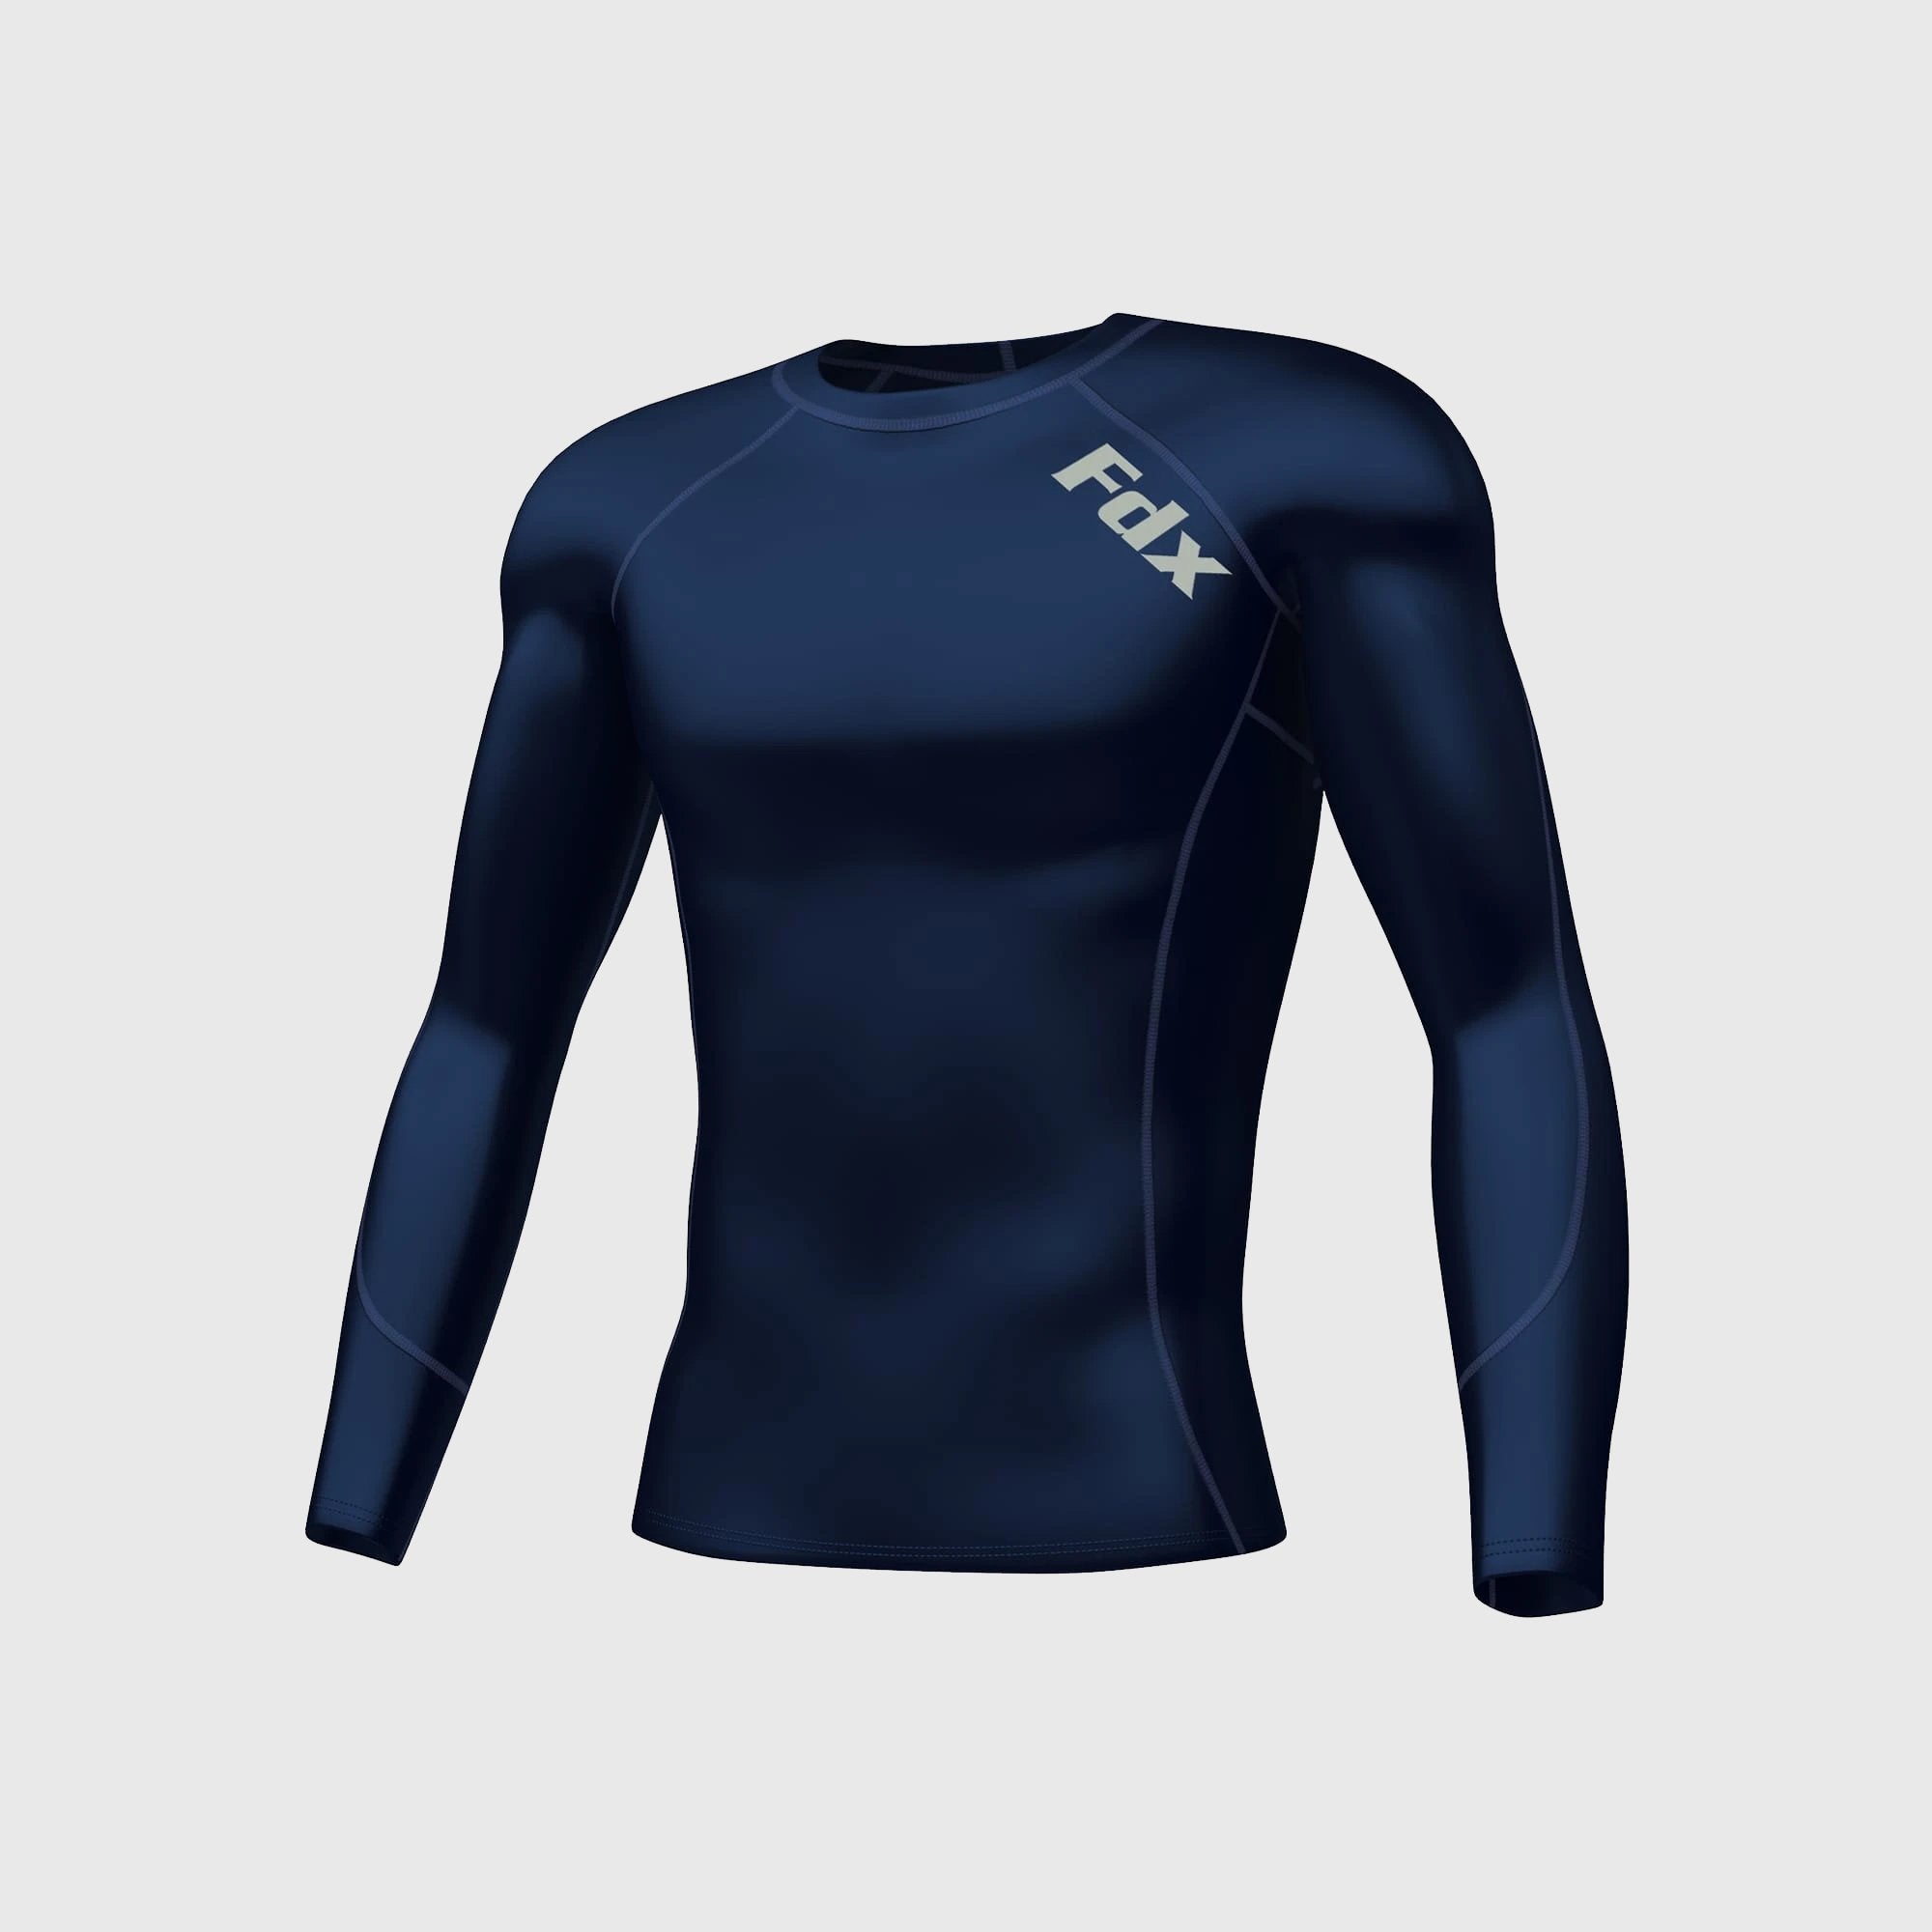 Fdx Thermolinx Men's Blue Set Compression Base Layer Shirt